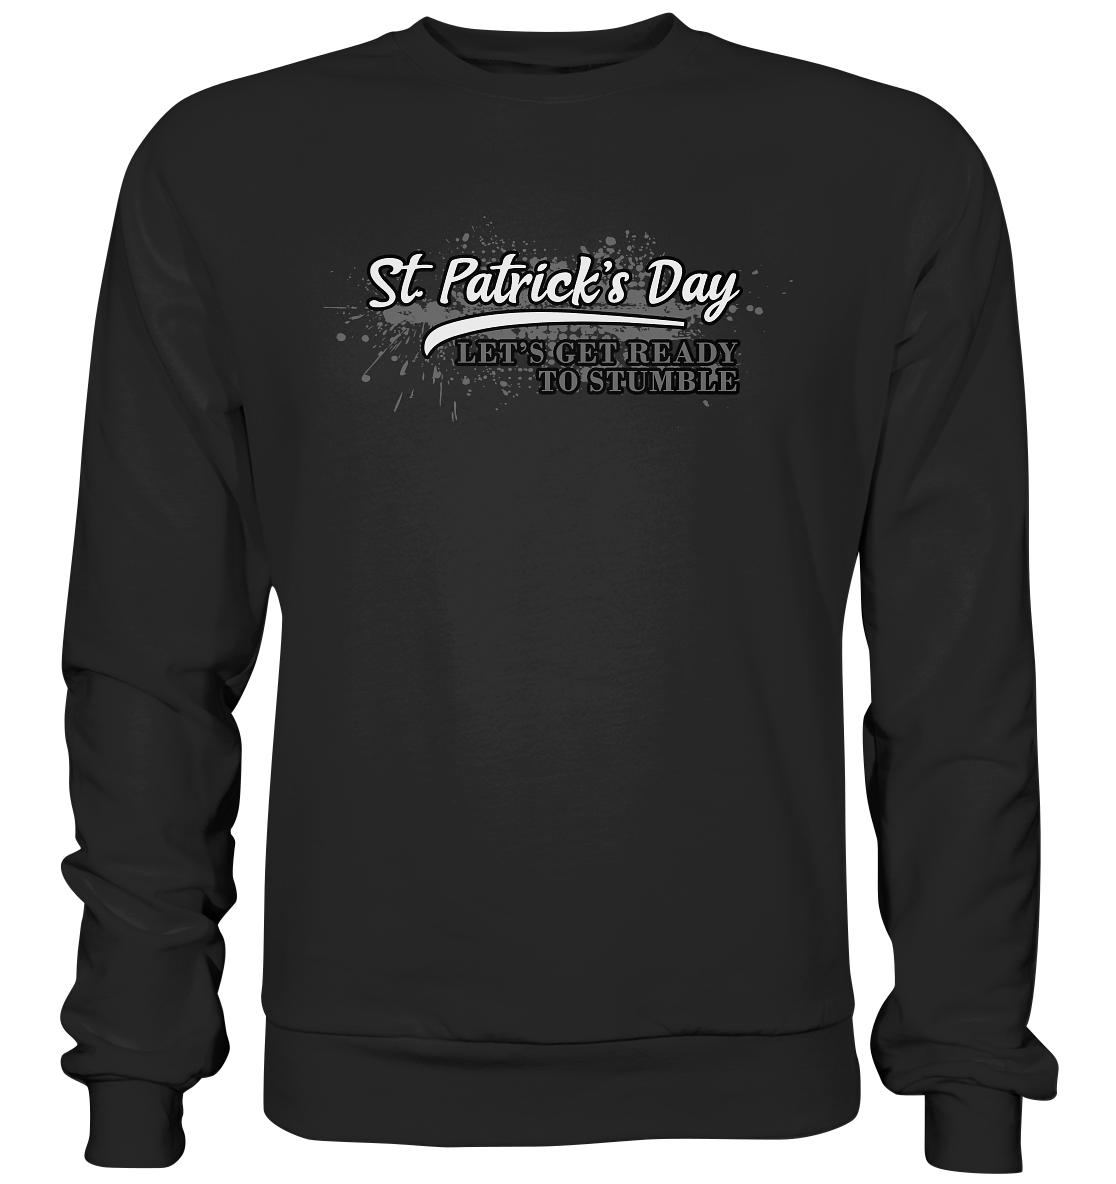 St. Patrick's Day "Let's Get Ready To Stumble" - Premium Sweatshirt